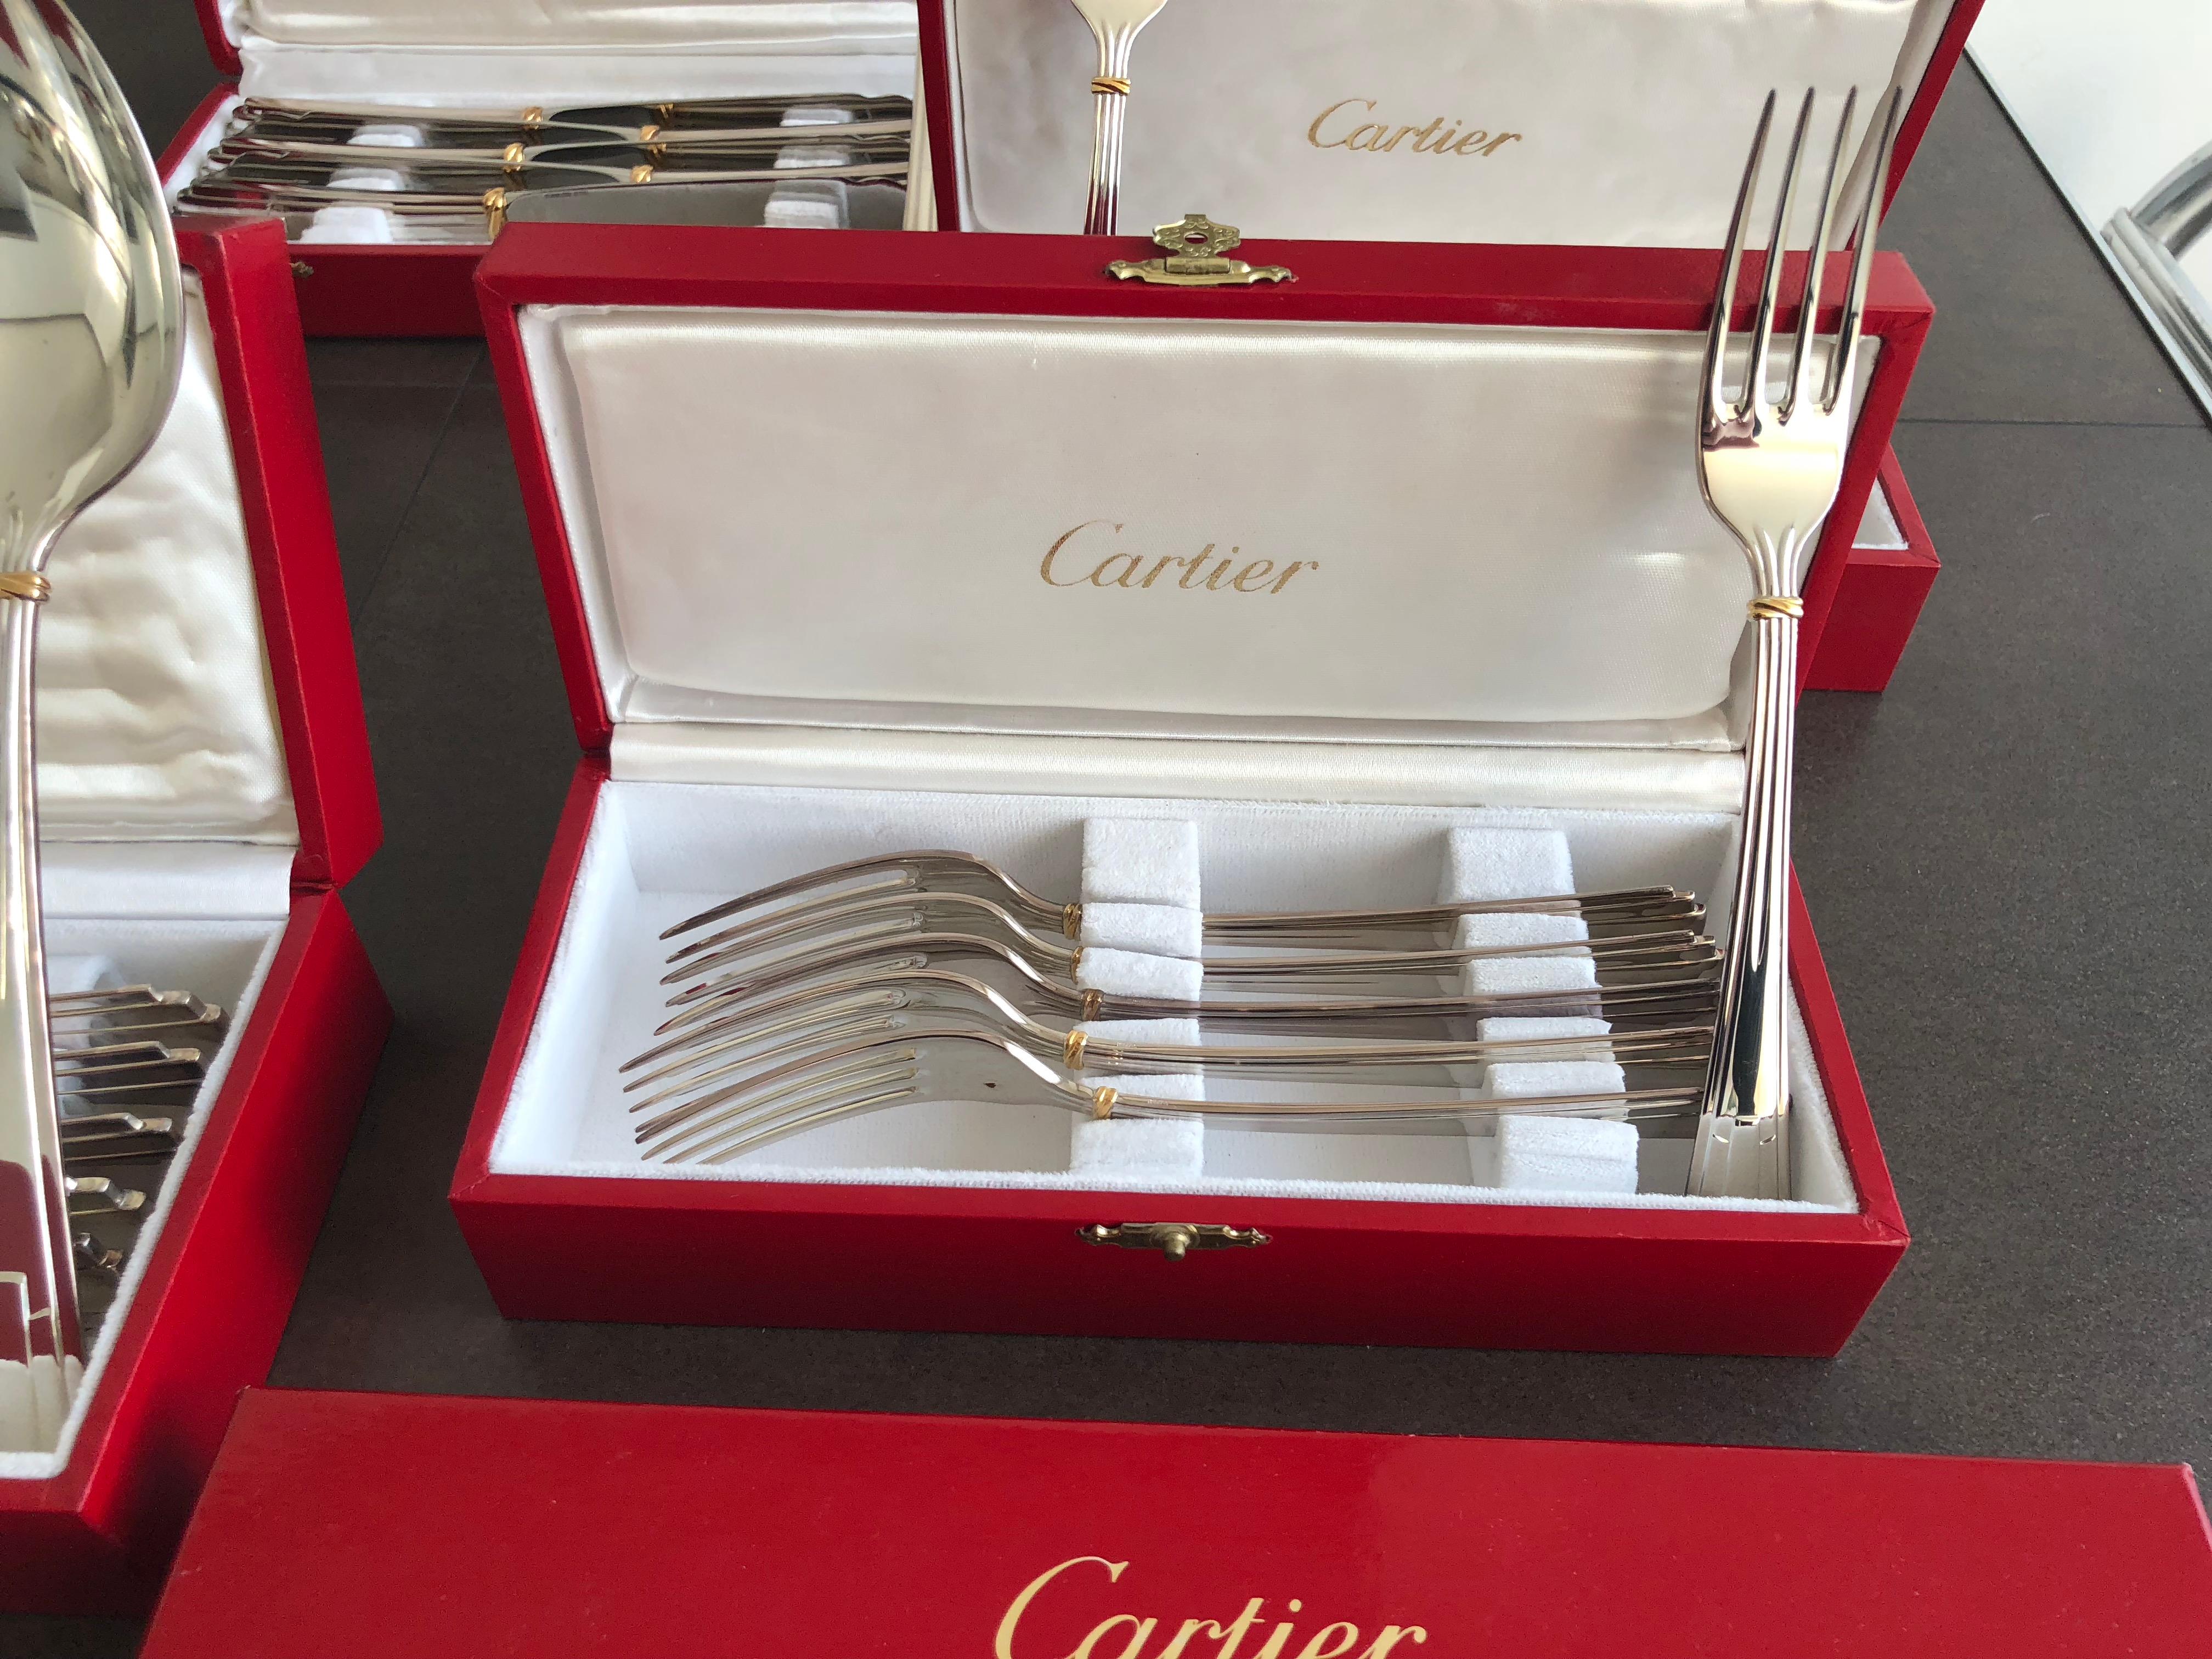 cartier cutlery